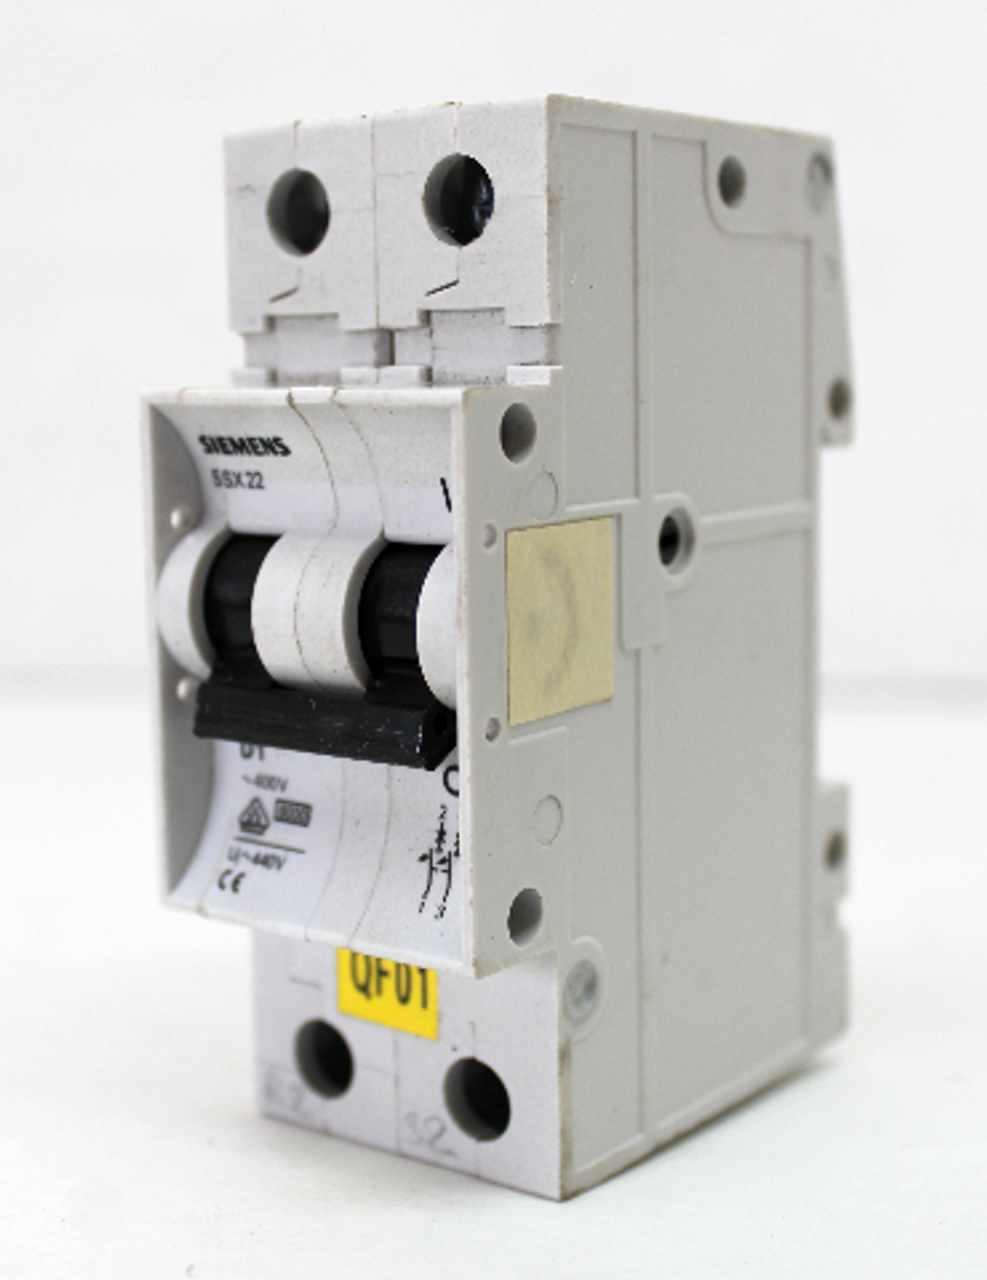 Siemens 5SX22 D1 Circuit Breaker 2 Pole, 1A, 400V